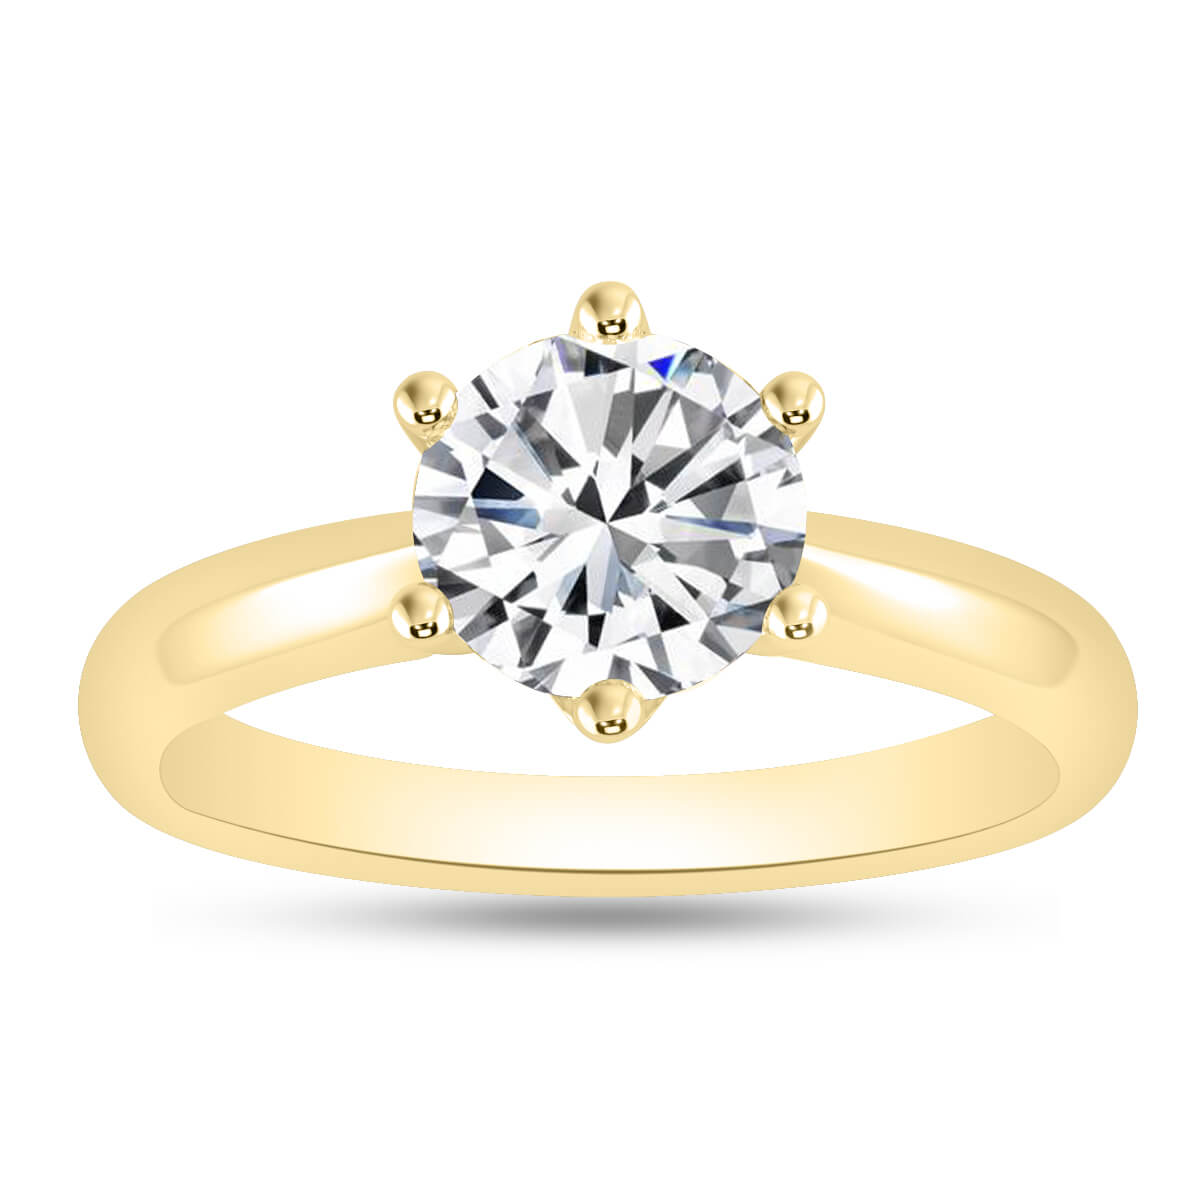 Silver Engagement Rings Swarovski Crystal Floral Forever Ring Image 1